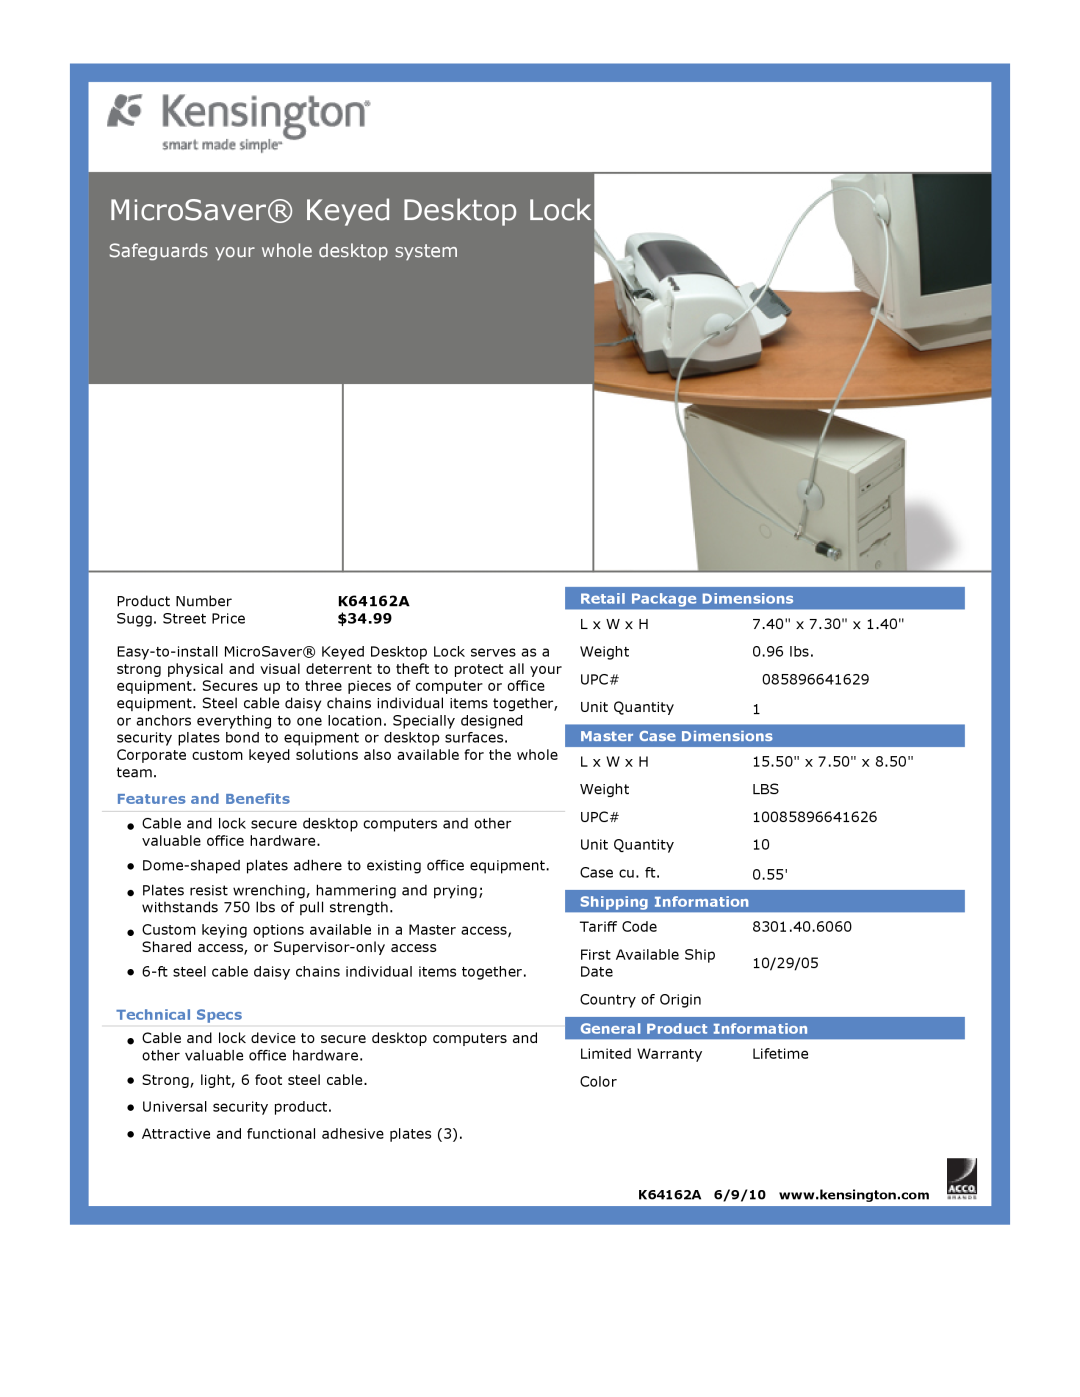 Kensington EU64325 MicroSaver Keyed Desktop Lock, Safeguards your whole desktop system, $34.99, Features and Benefits 